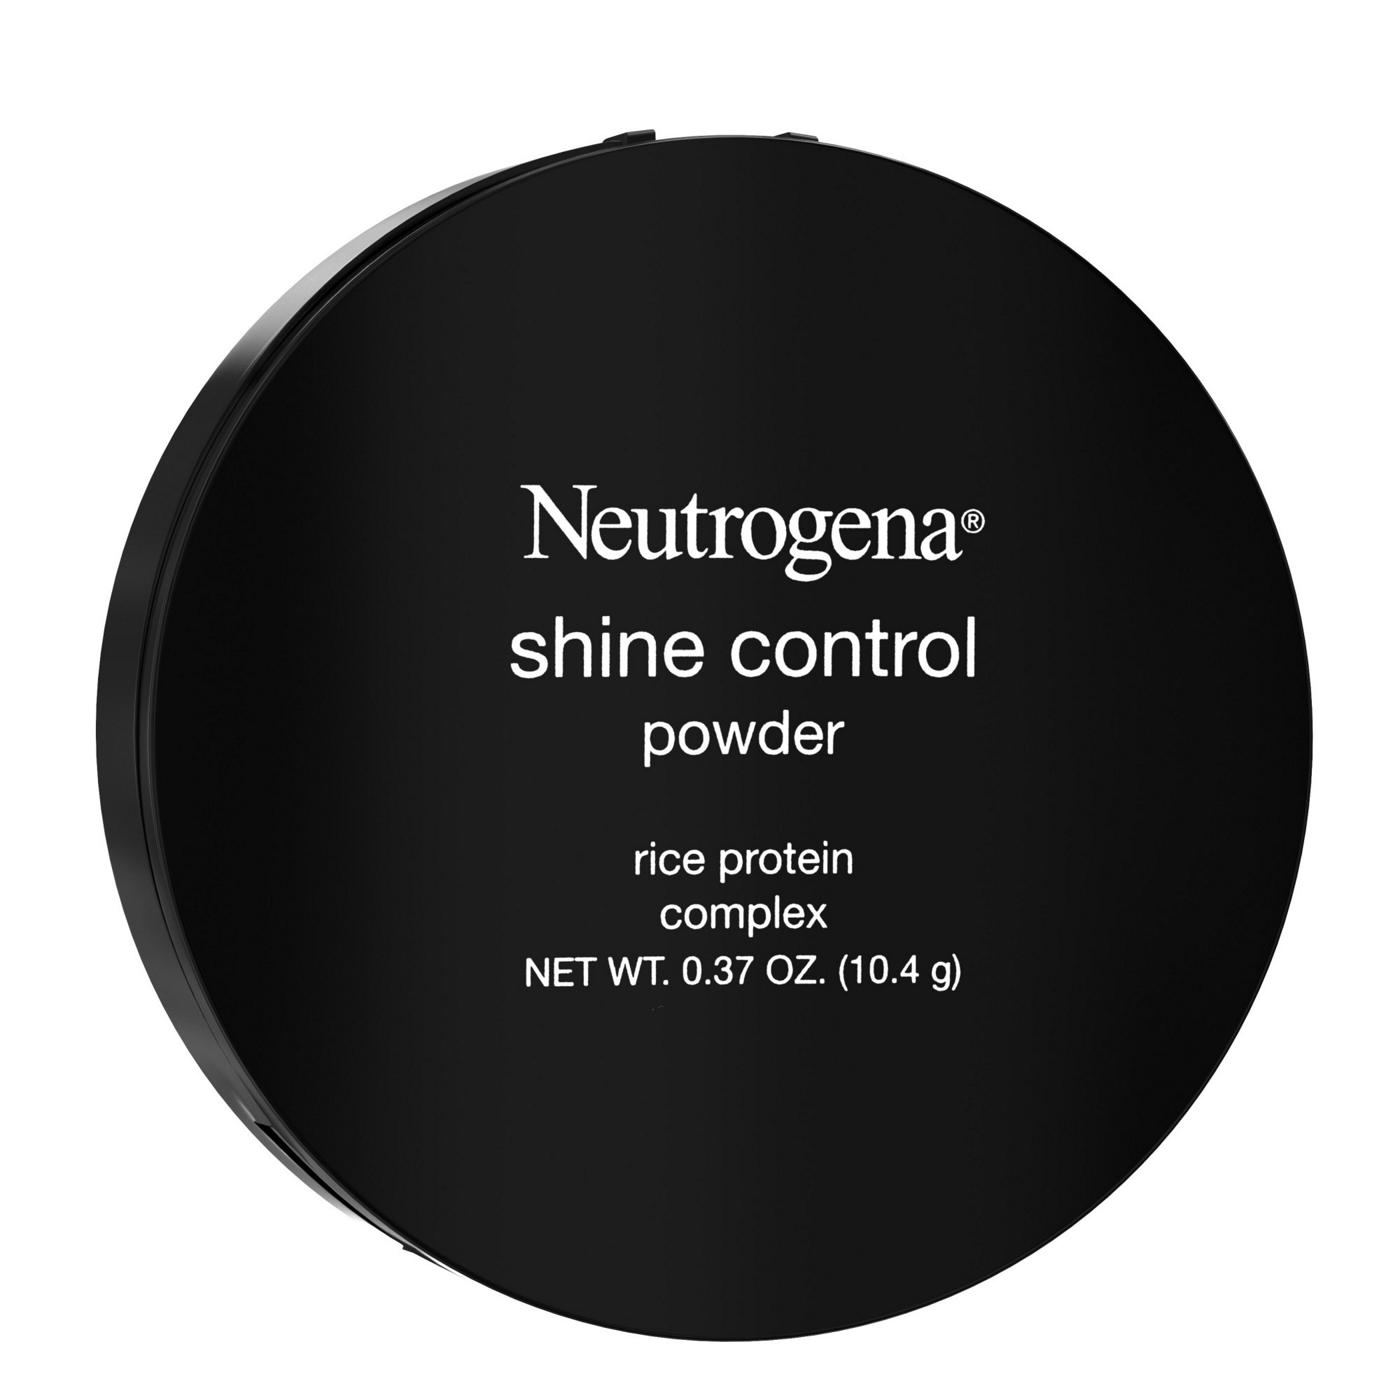 Neutrogena Shine Control Powder; image 5 of 6